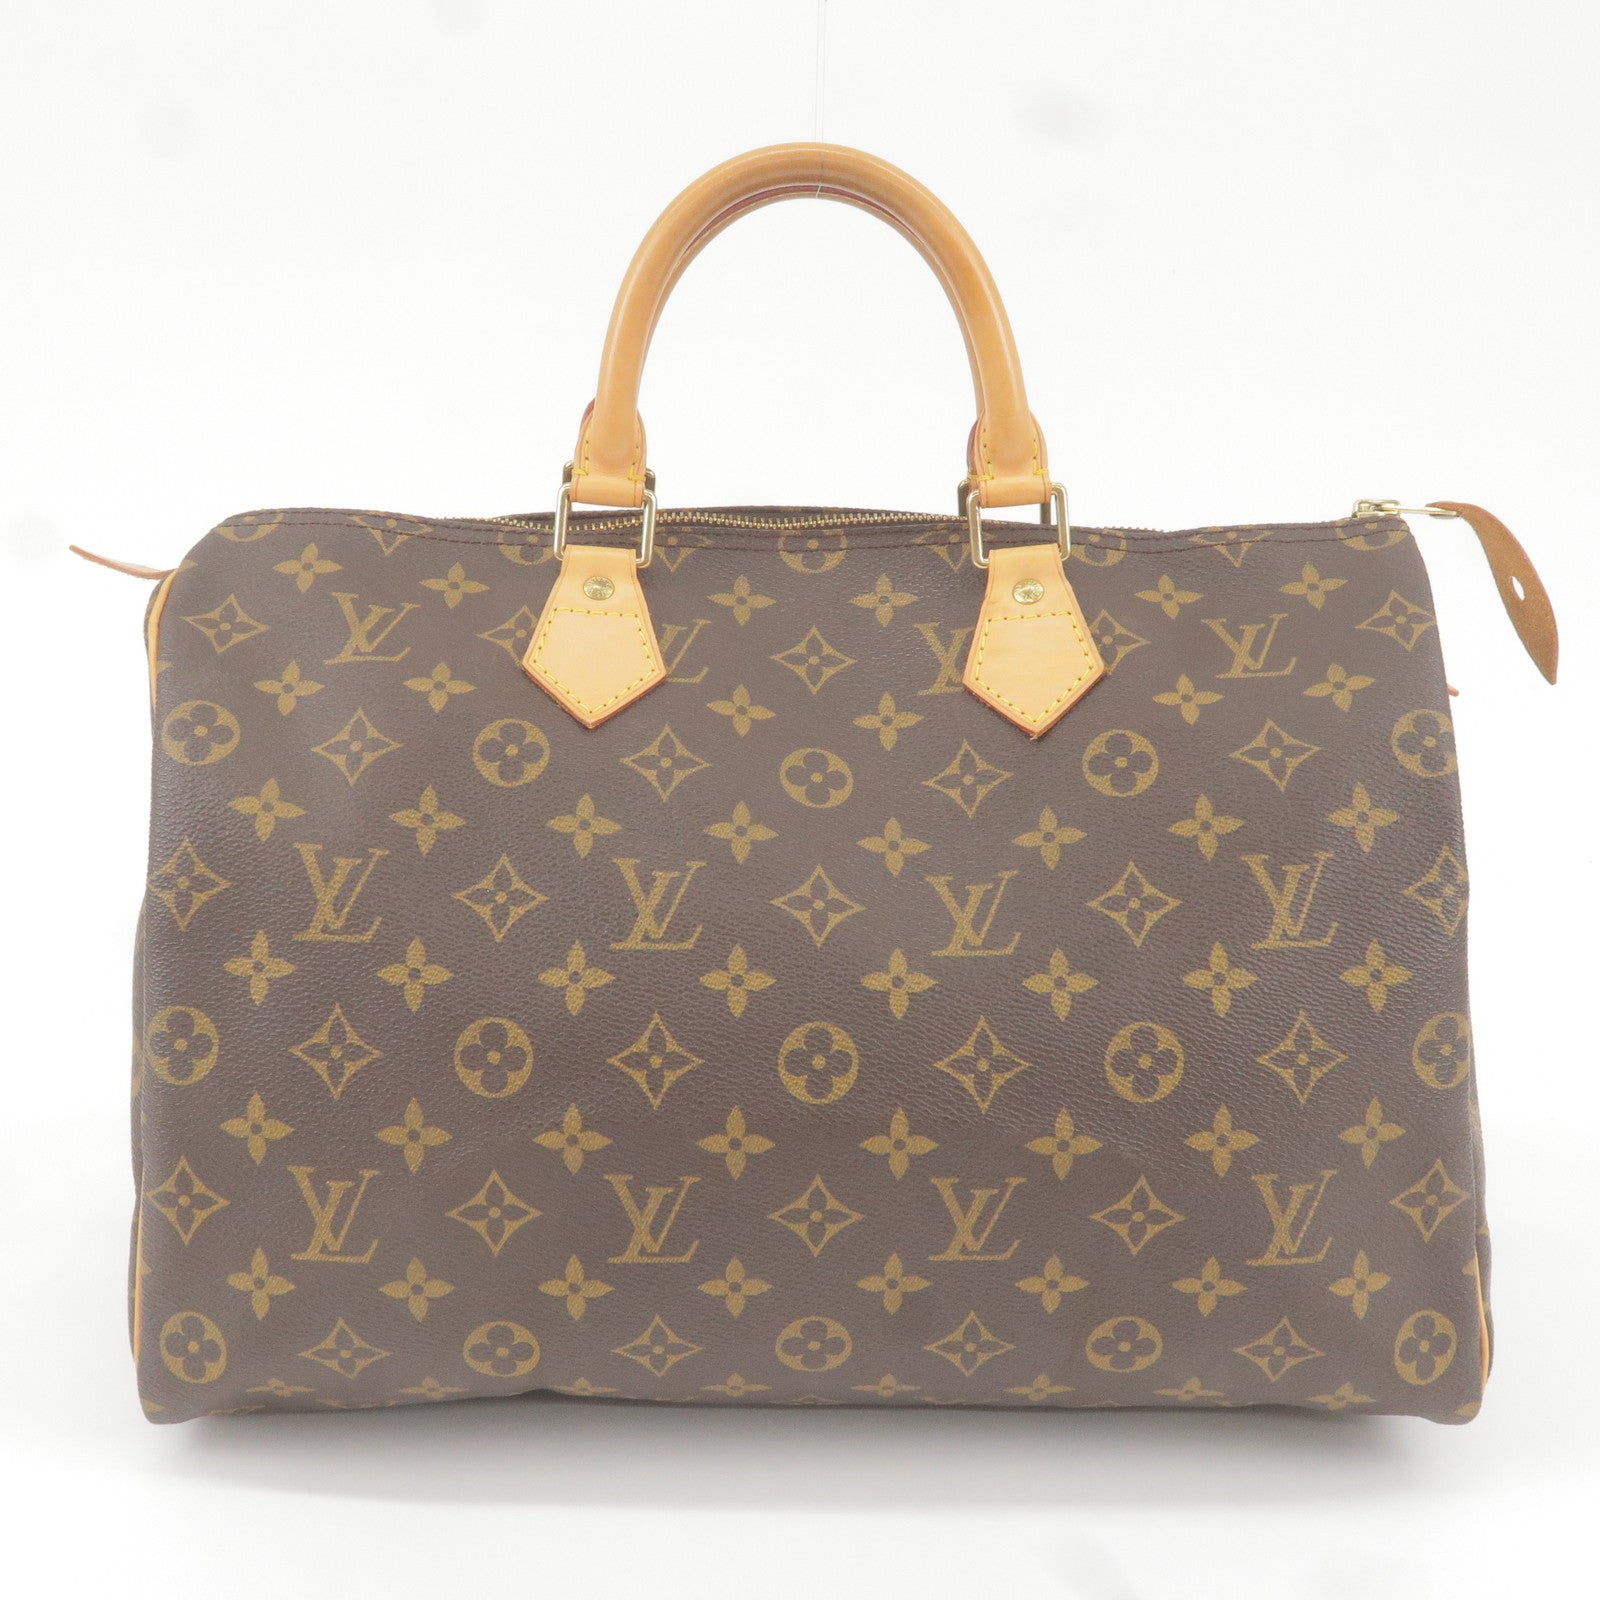 Louis Vuitton S/S 2012 Monogram Handbag